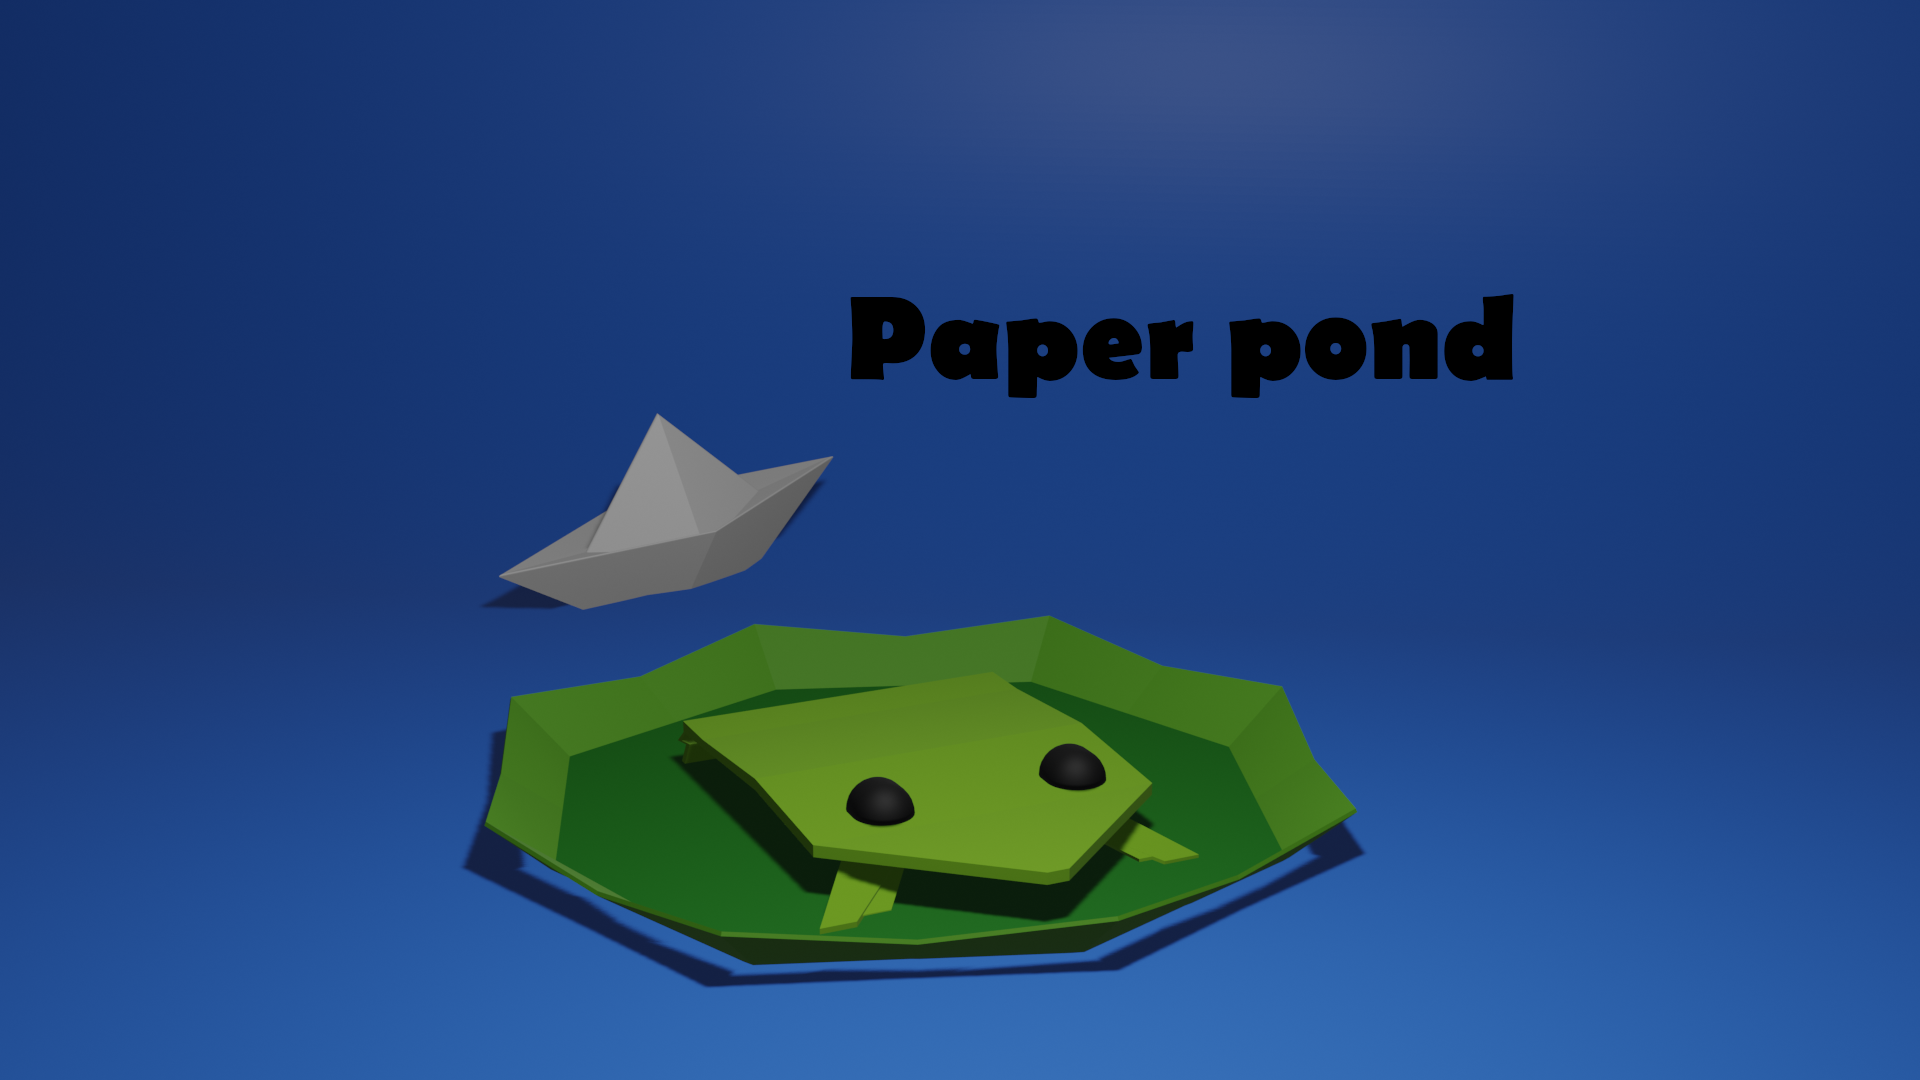 Paper pond